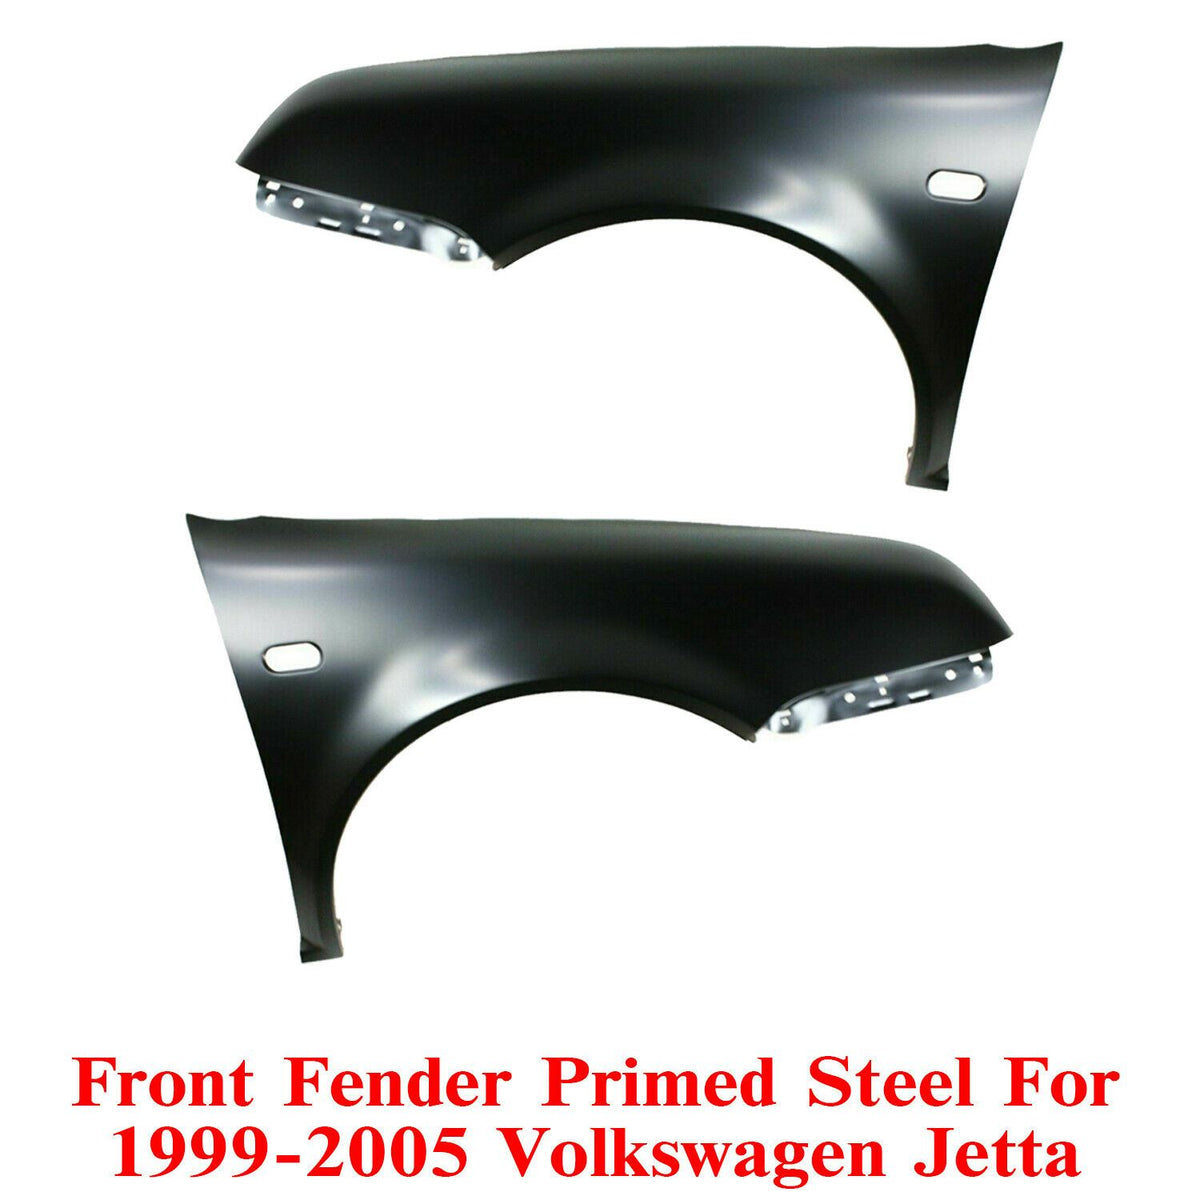 Set of 2 Front Fender Primed Steel Left & Right For 1999-2005